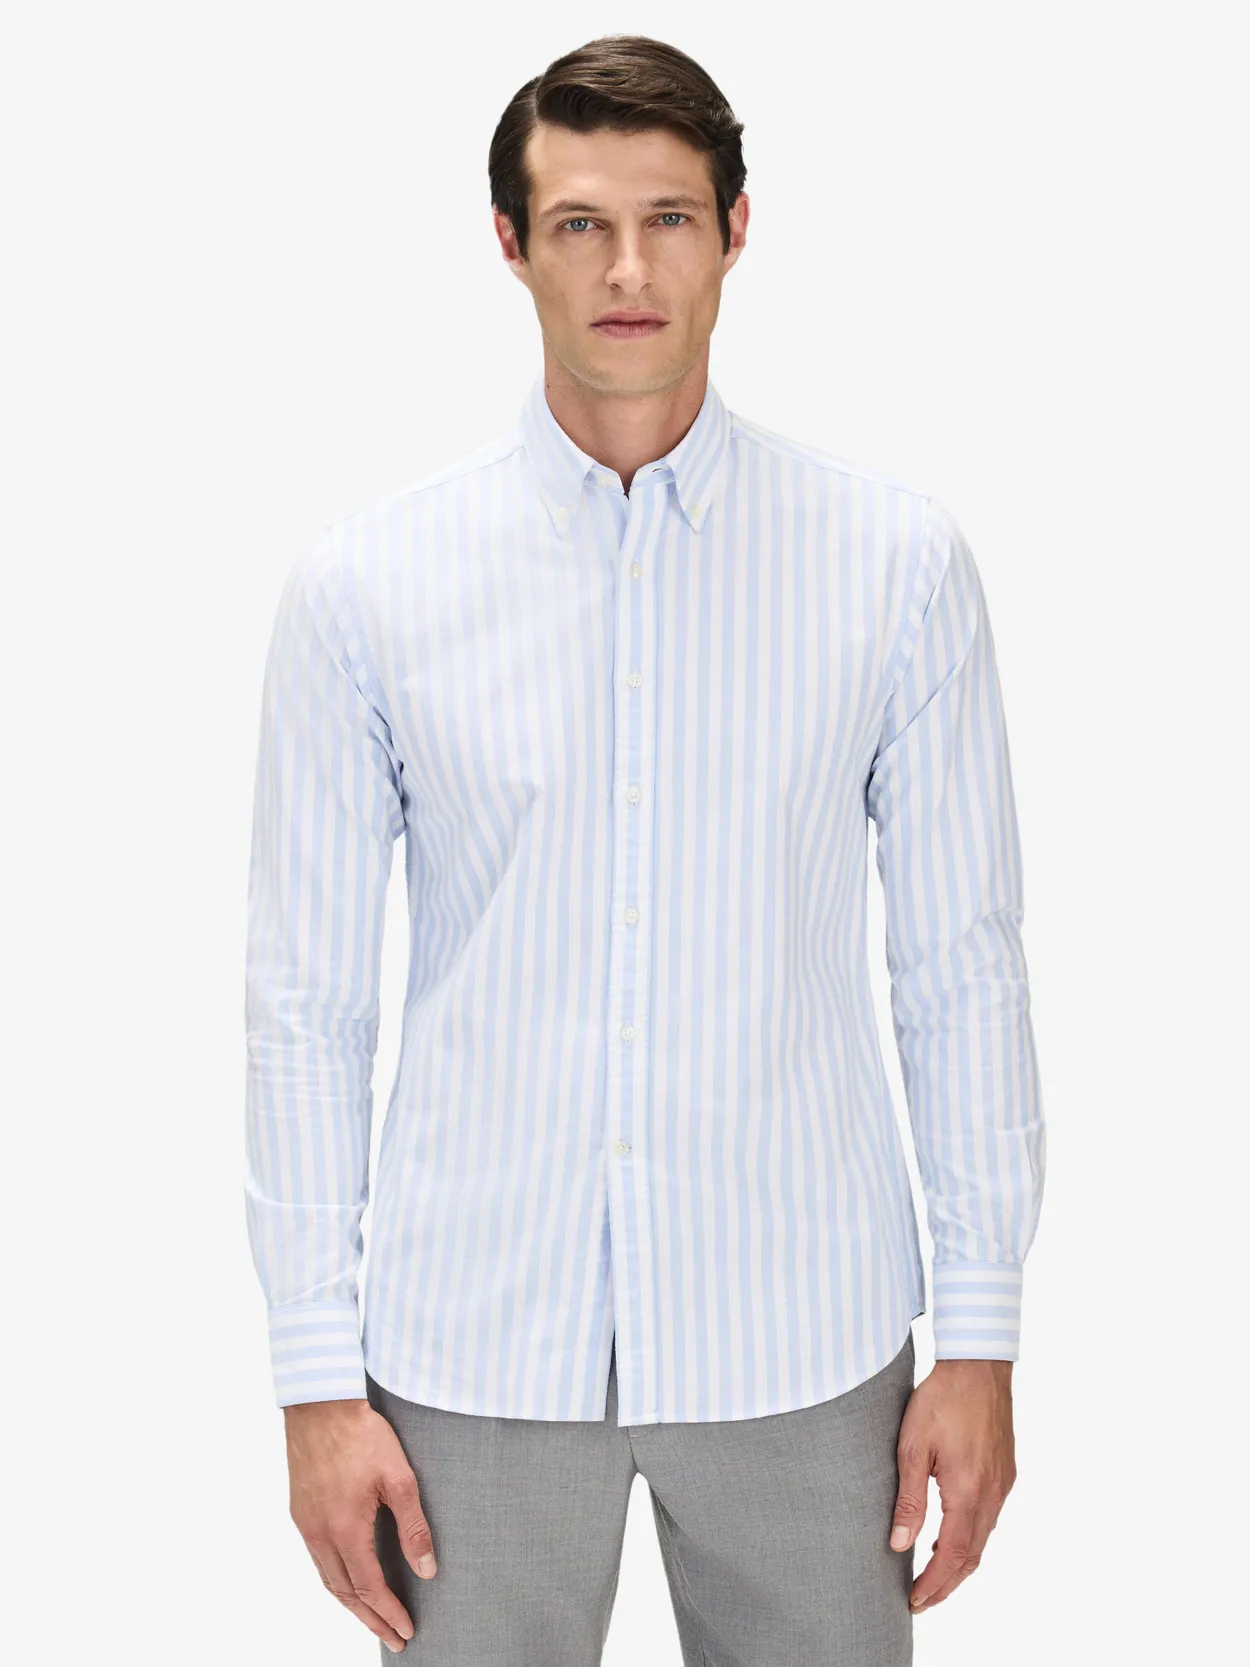 Blau & Weiß Gestreiftes Oxfordhemd